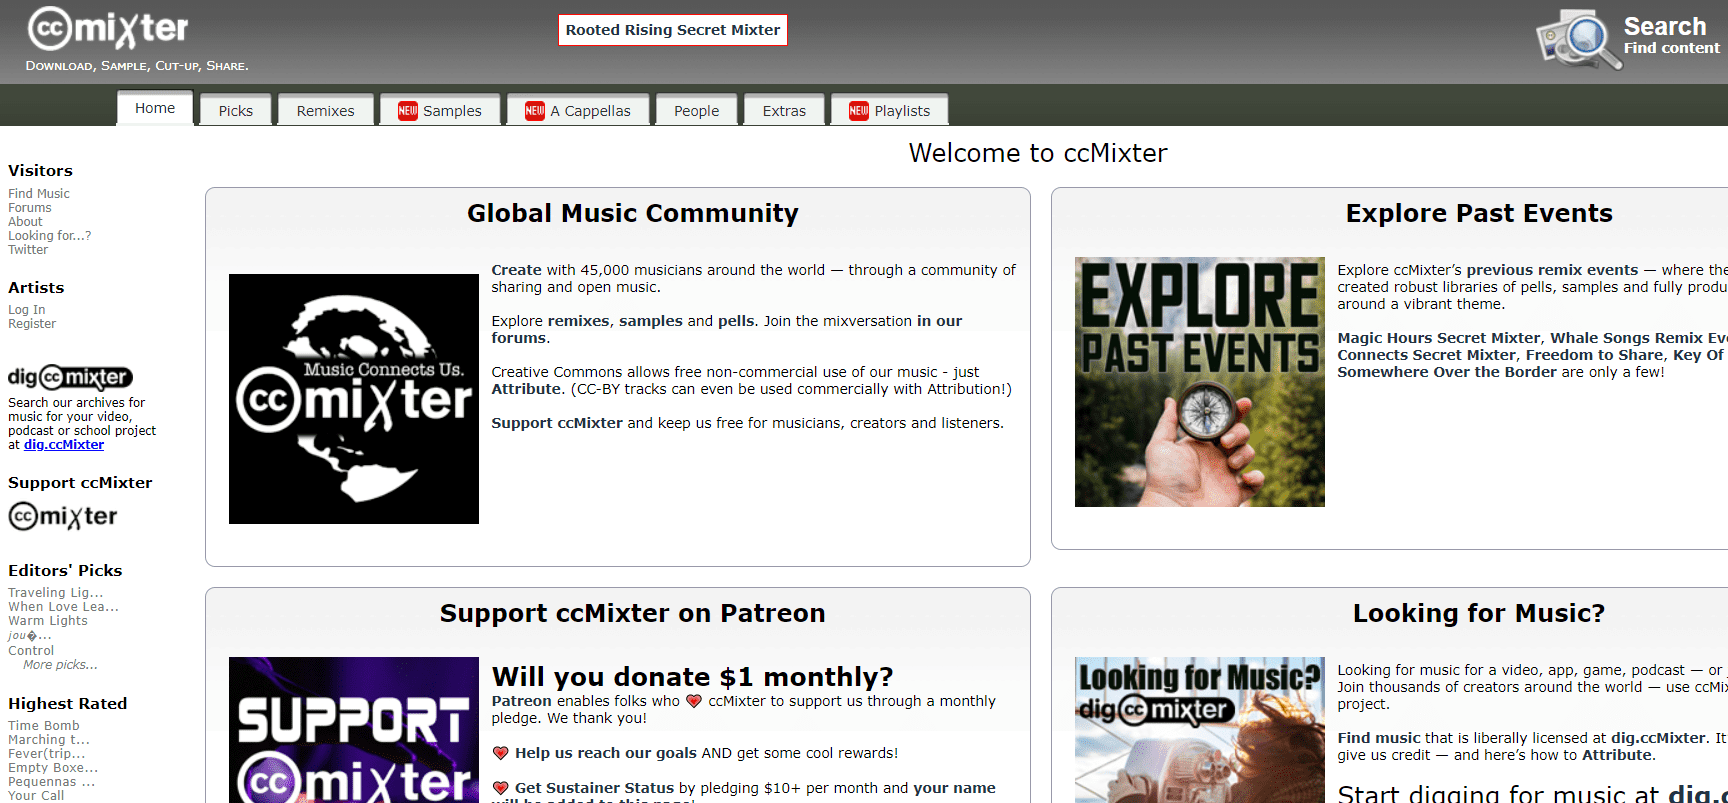 ccMixter Download Free Music